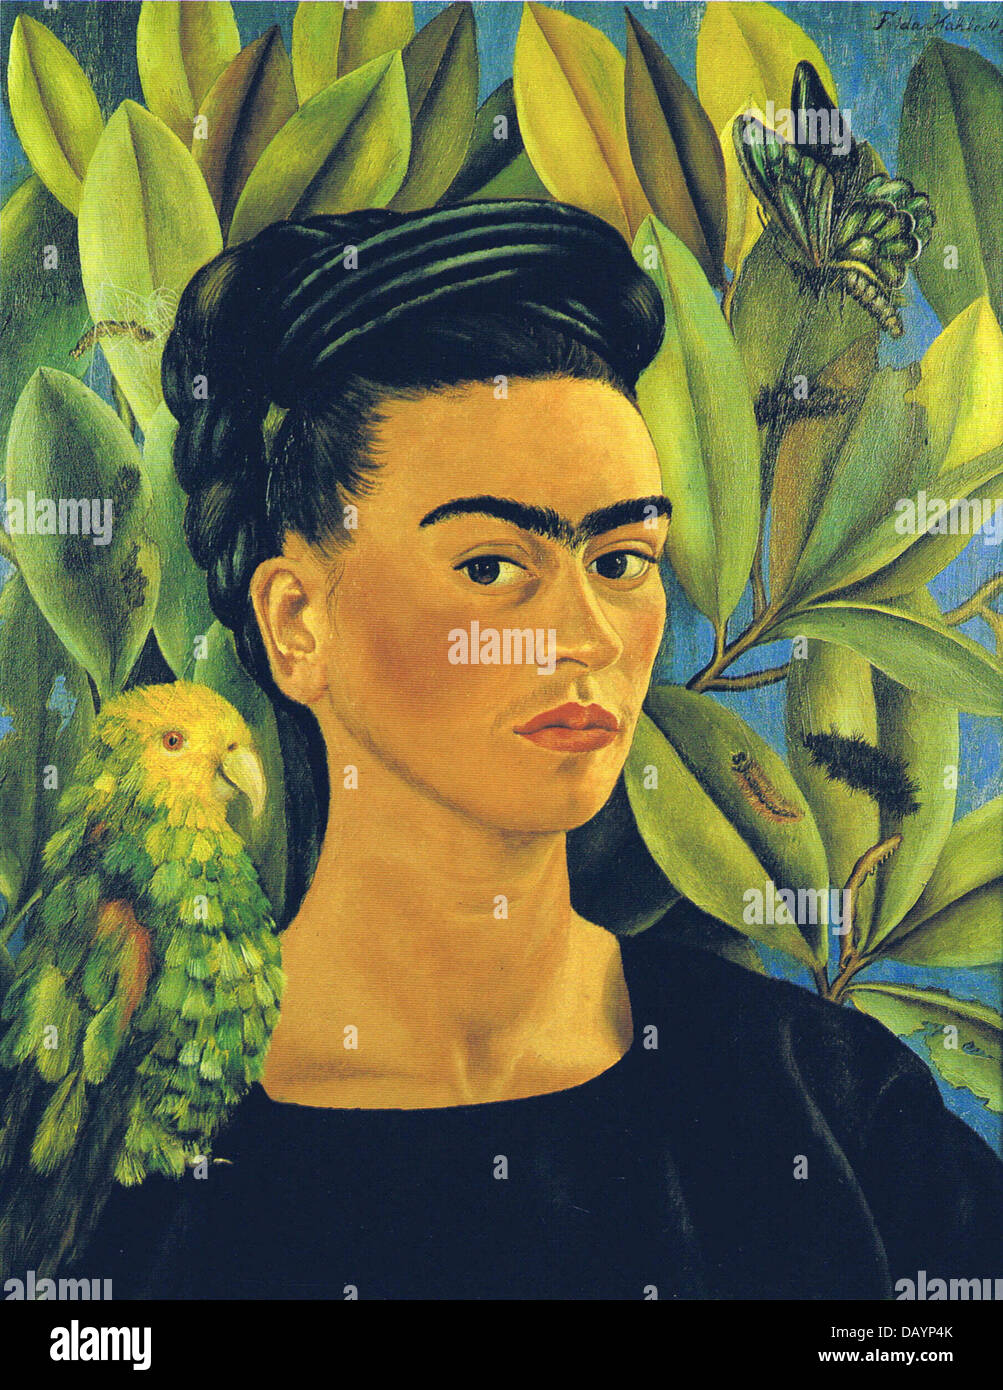 Frida Kahlo Self-portraitv with Bonito 1941 Stock Photo